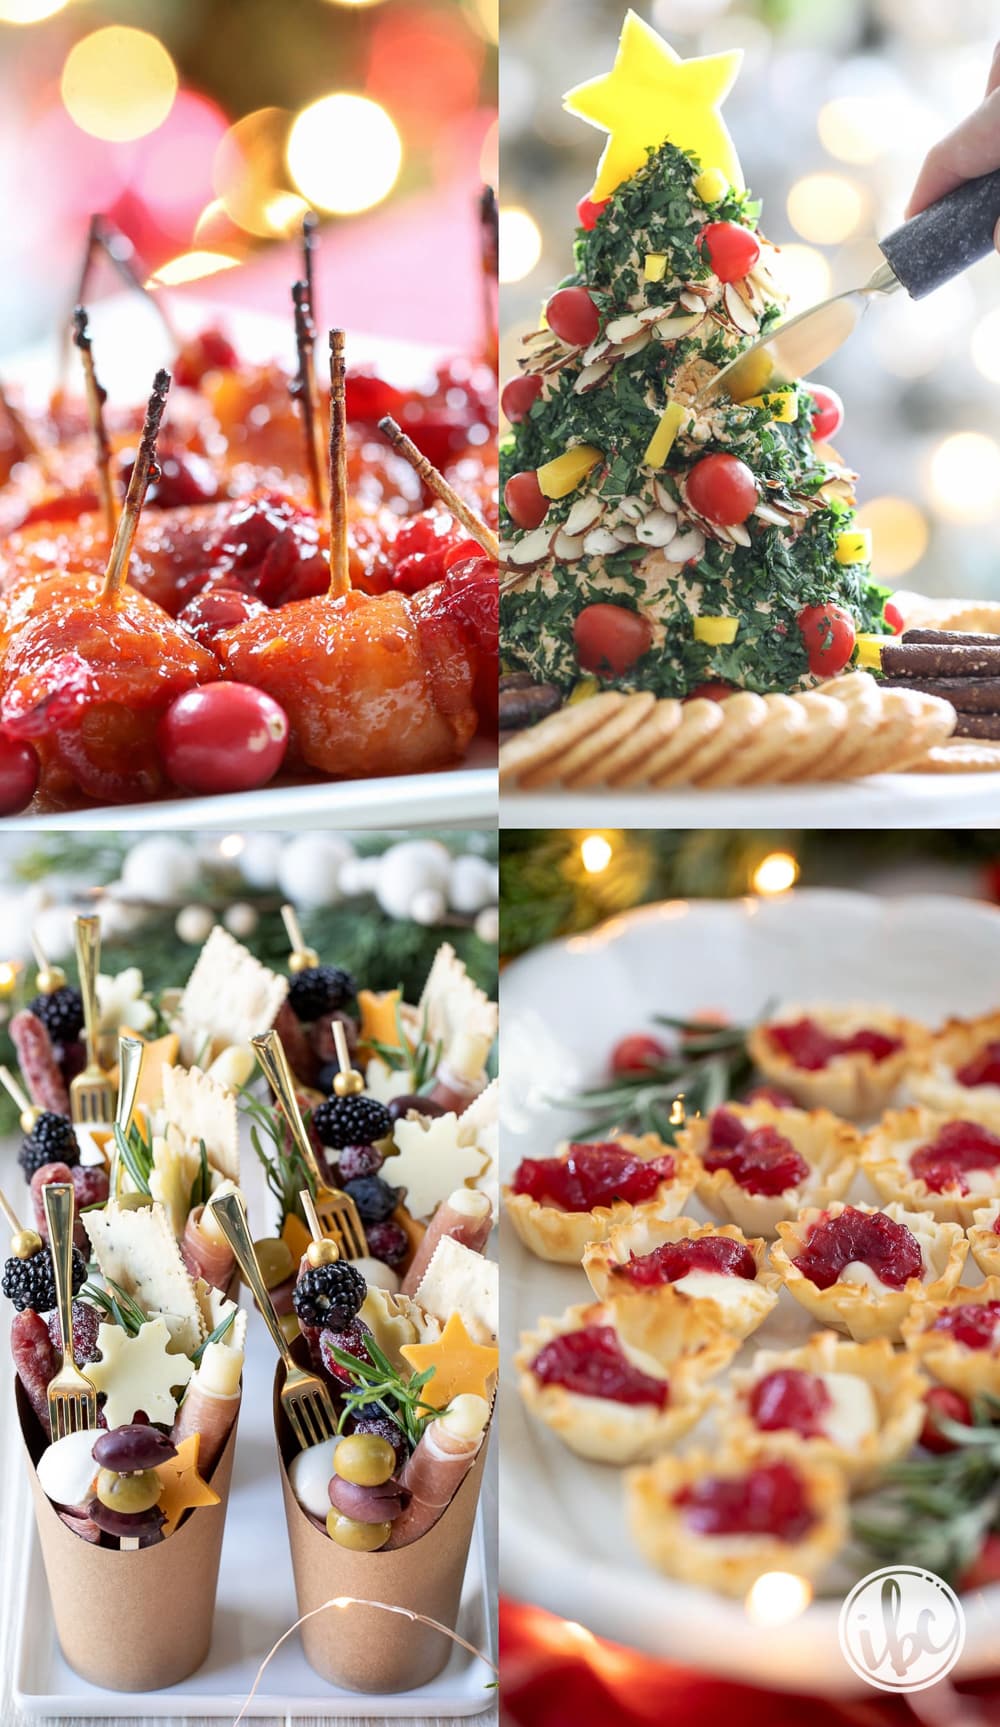 100 Best Christmas Dinner Ideas for a Festive Holiday Menu